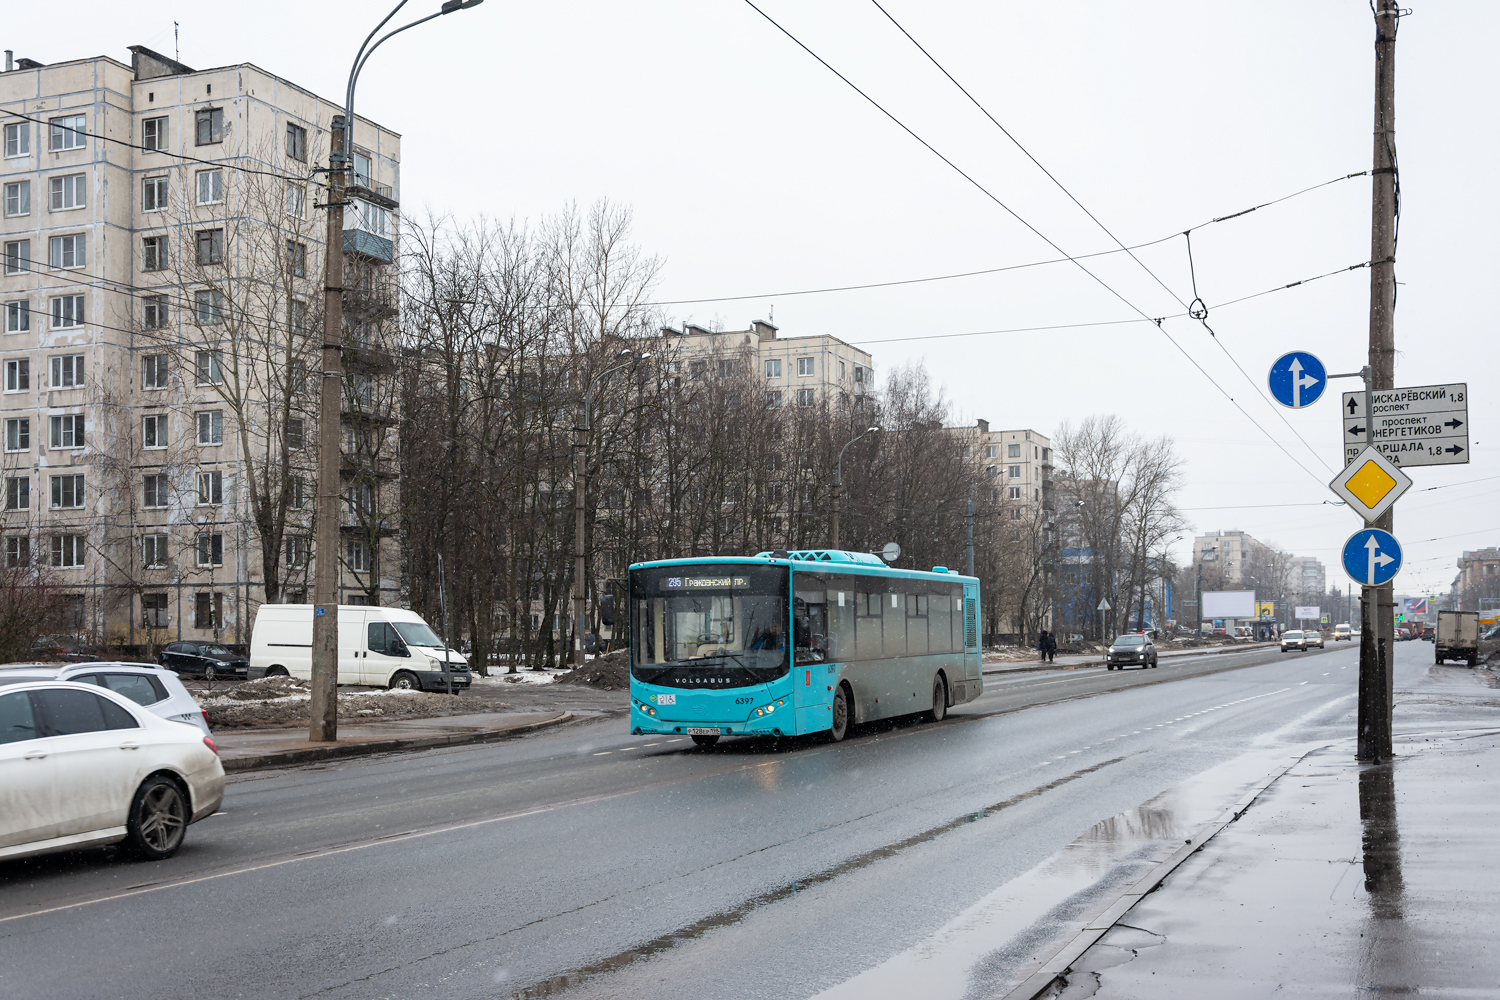 Petersburg, Volgabus-5270.G4 (LNG) # 6397